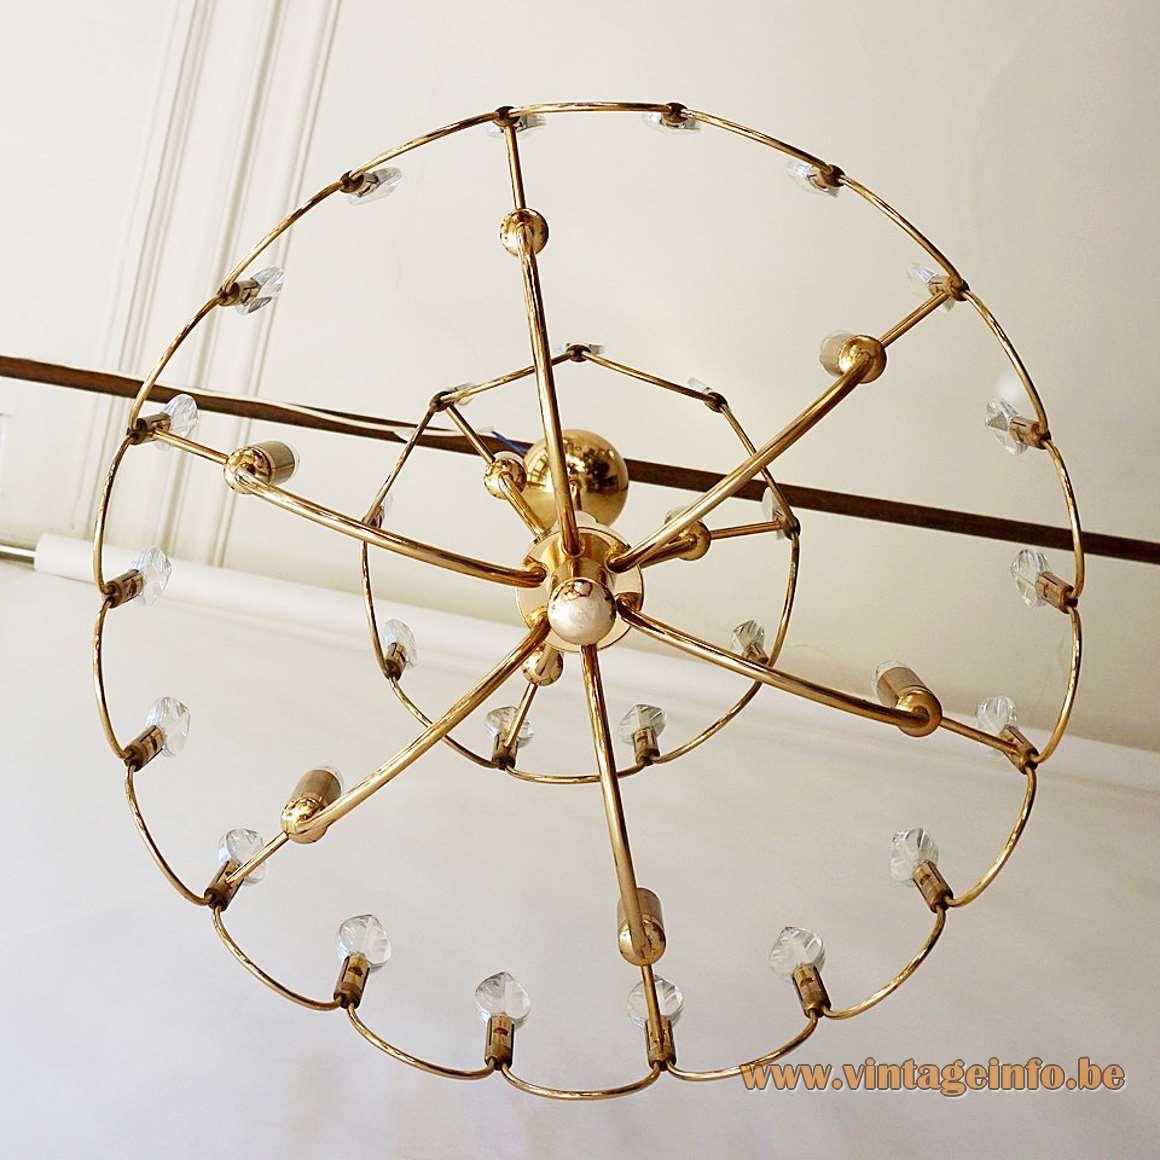 Gaetano Sciolari brass & crystal drops chandelier curved thin rods 9 light bulbs 1970s Sciolari Illuminazione Italy 